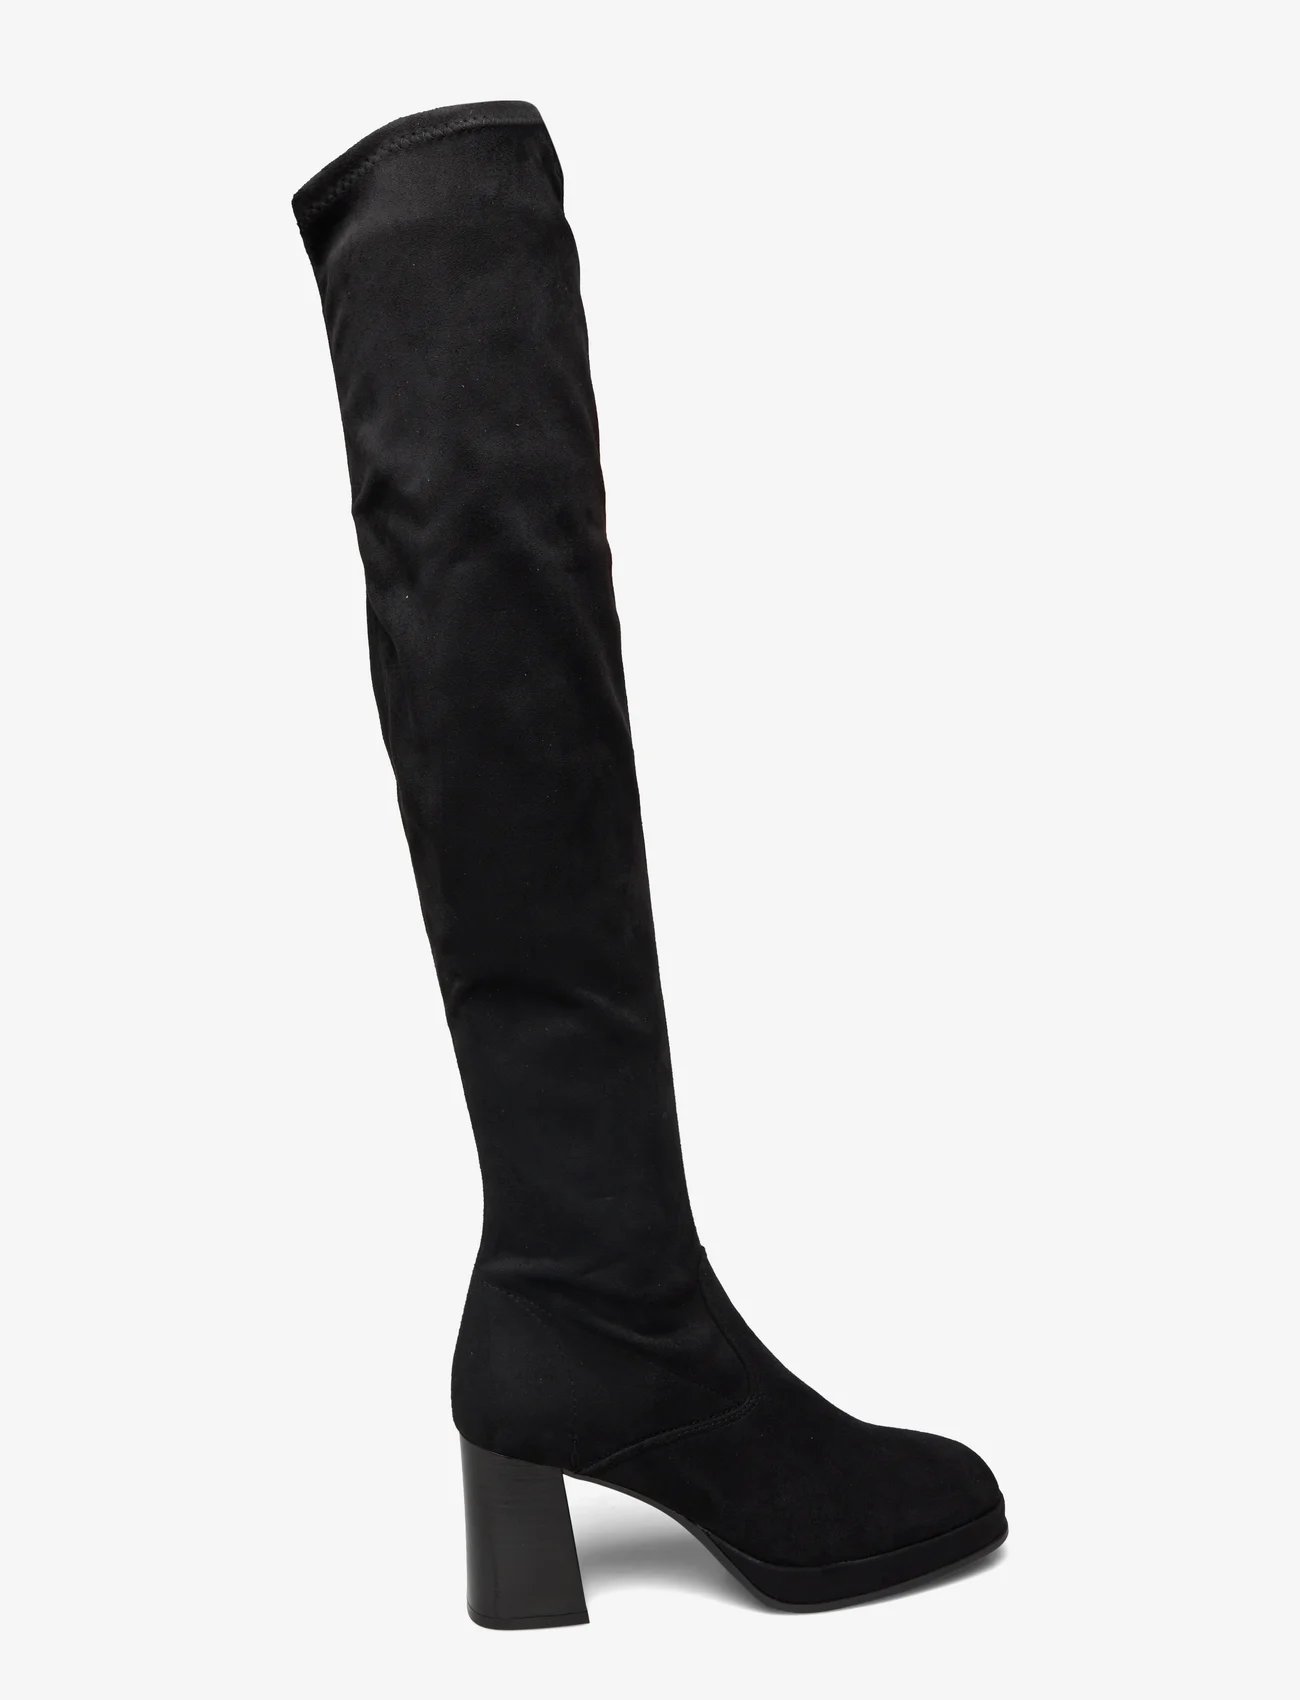 Tamaris - Woms Boots - knee high boots - black - 1